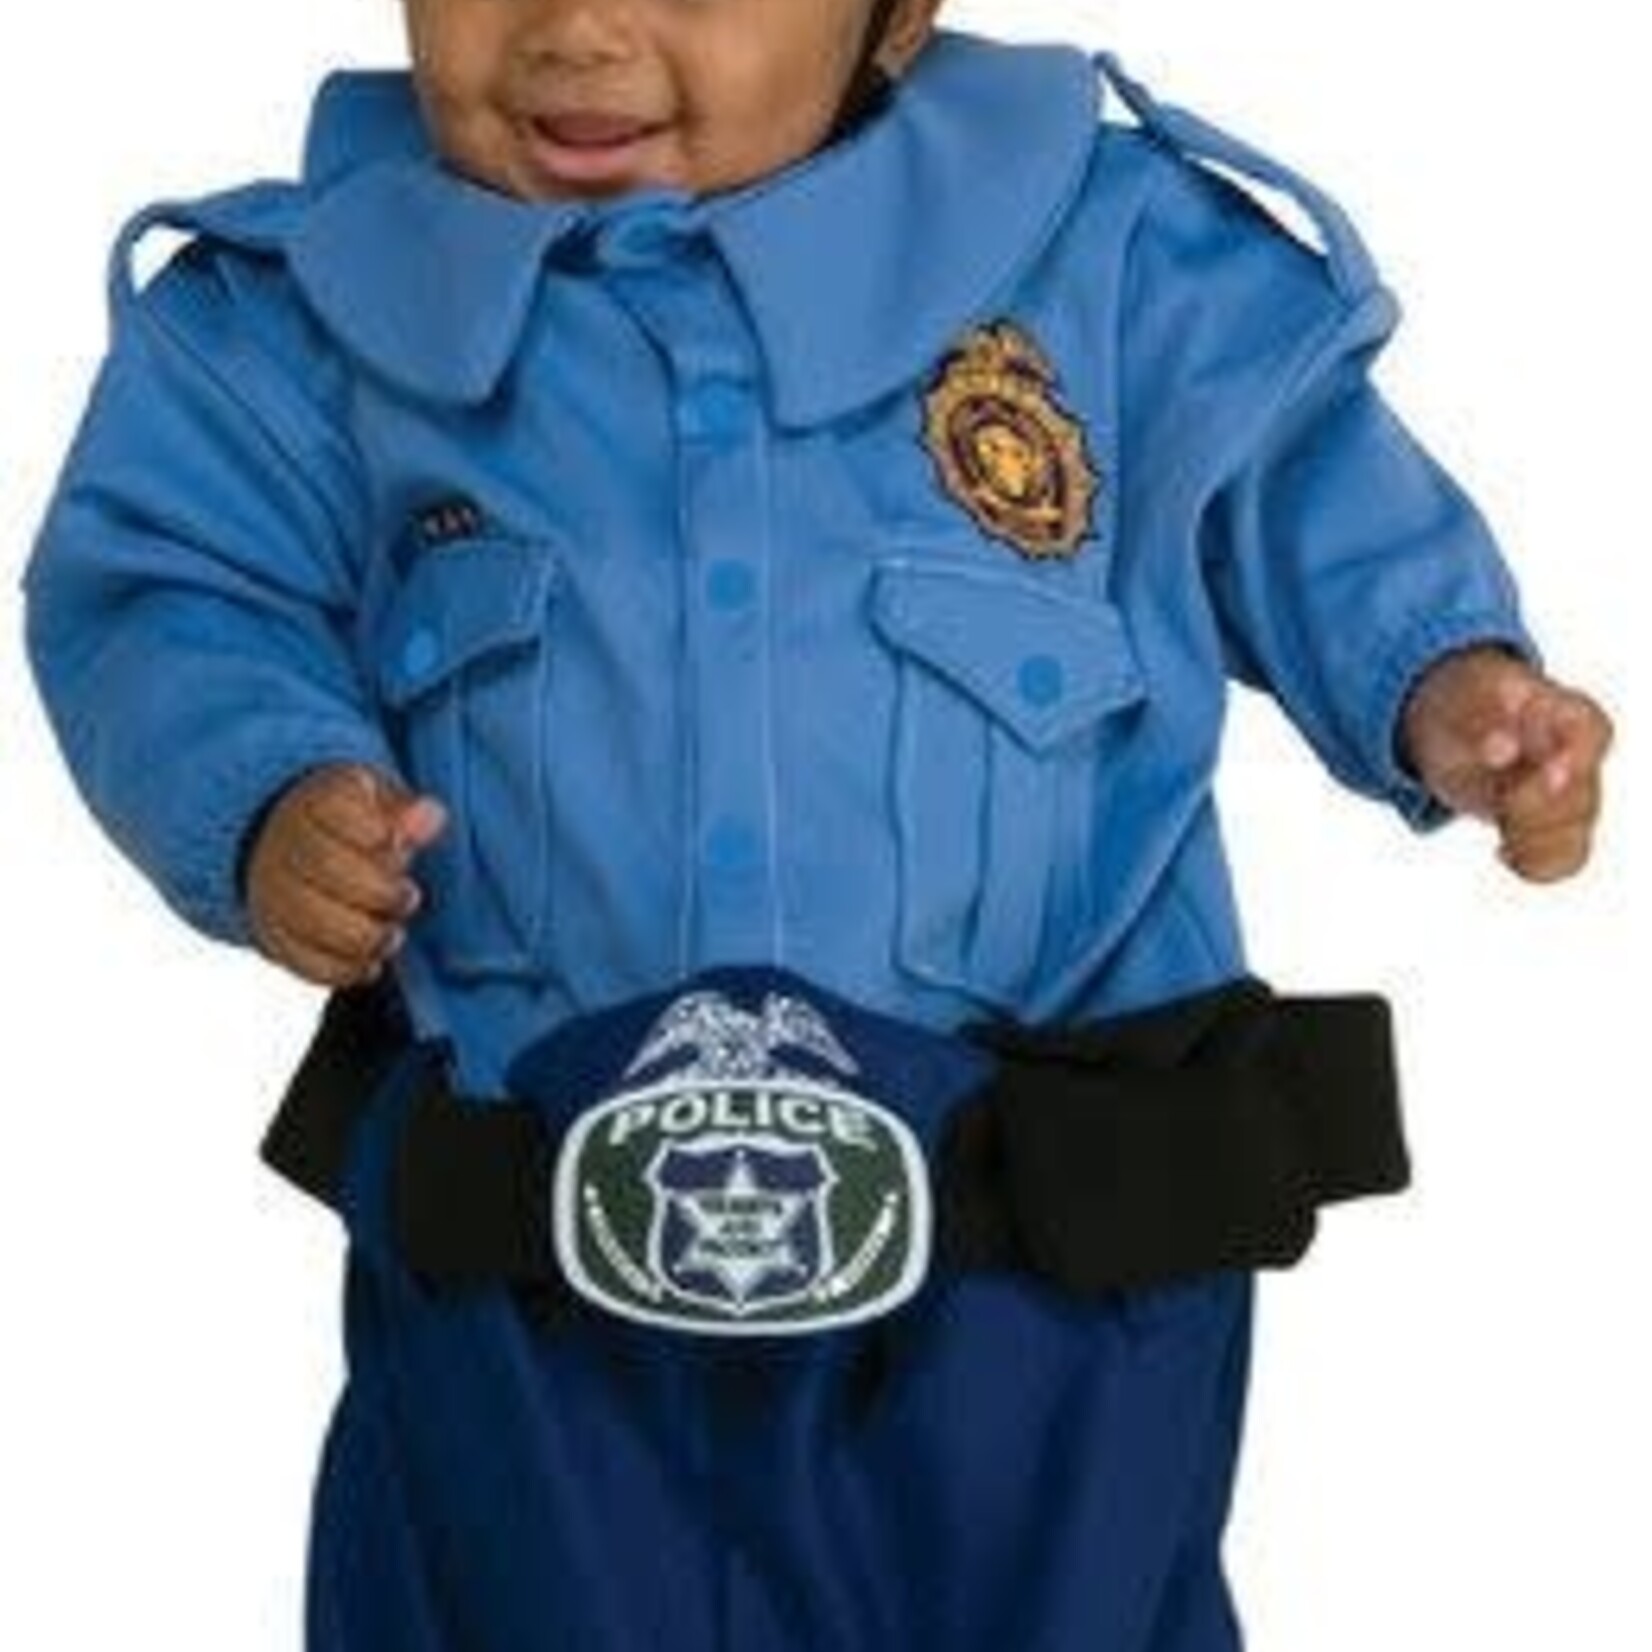 Police Officer Newborn Costume